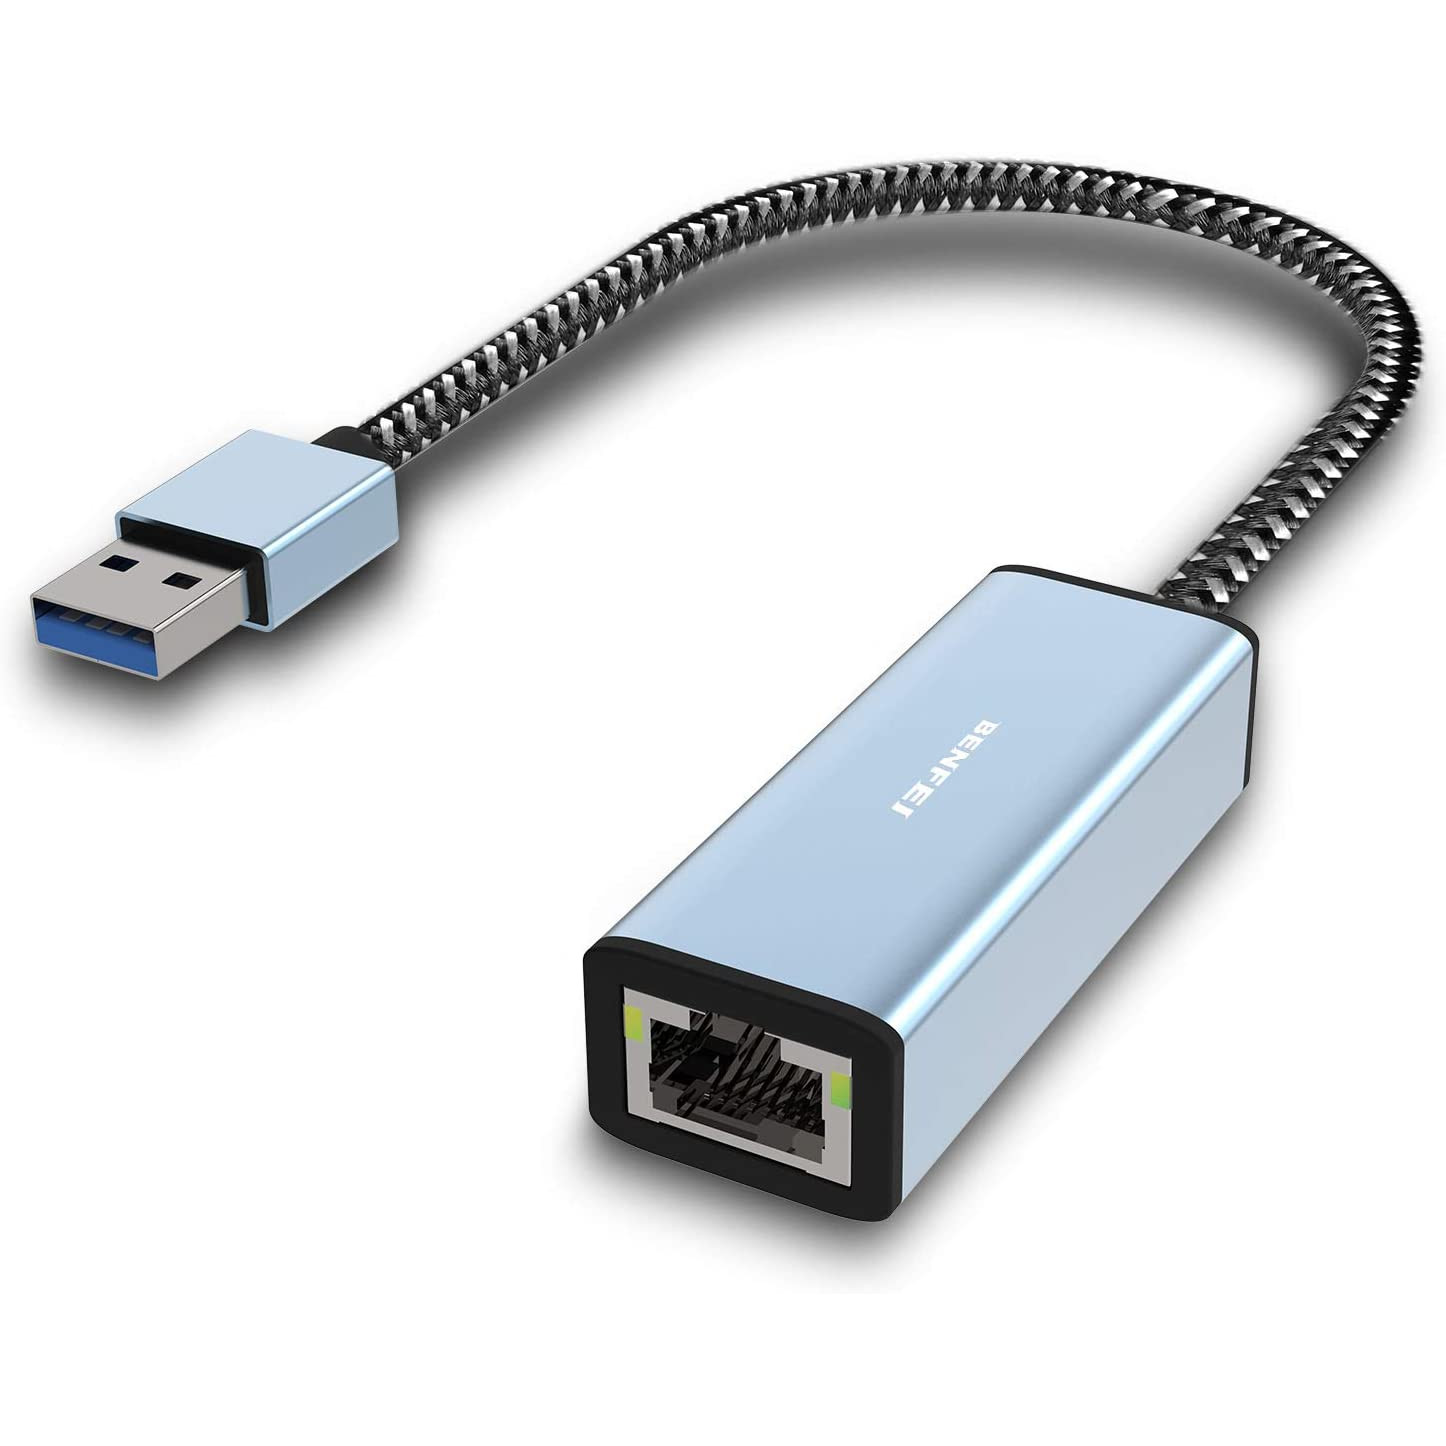 Usb vid 2357. USB Ethernet Adapter. TPLINK ue300 External USB 3,0 to rj45 Gigabit Ethernet Network Adapter. OEM USB lan. Ethernet Adapter NARXLARI.